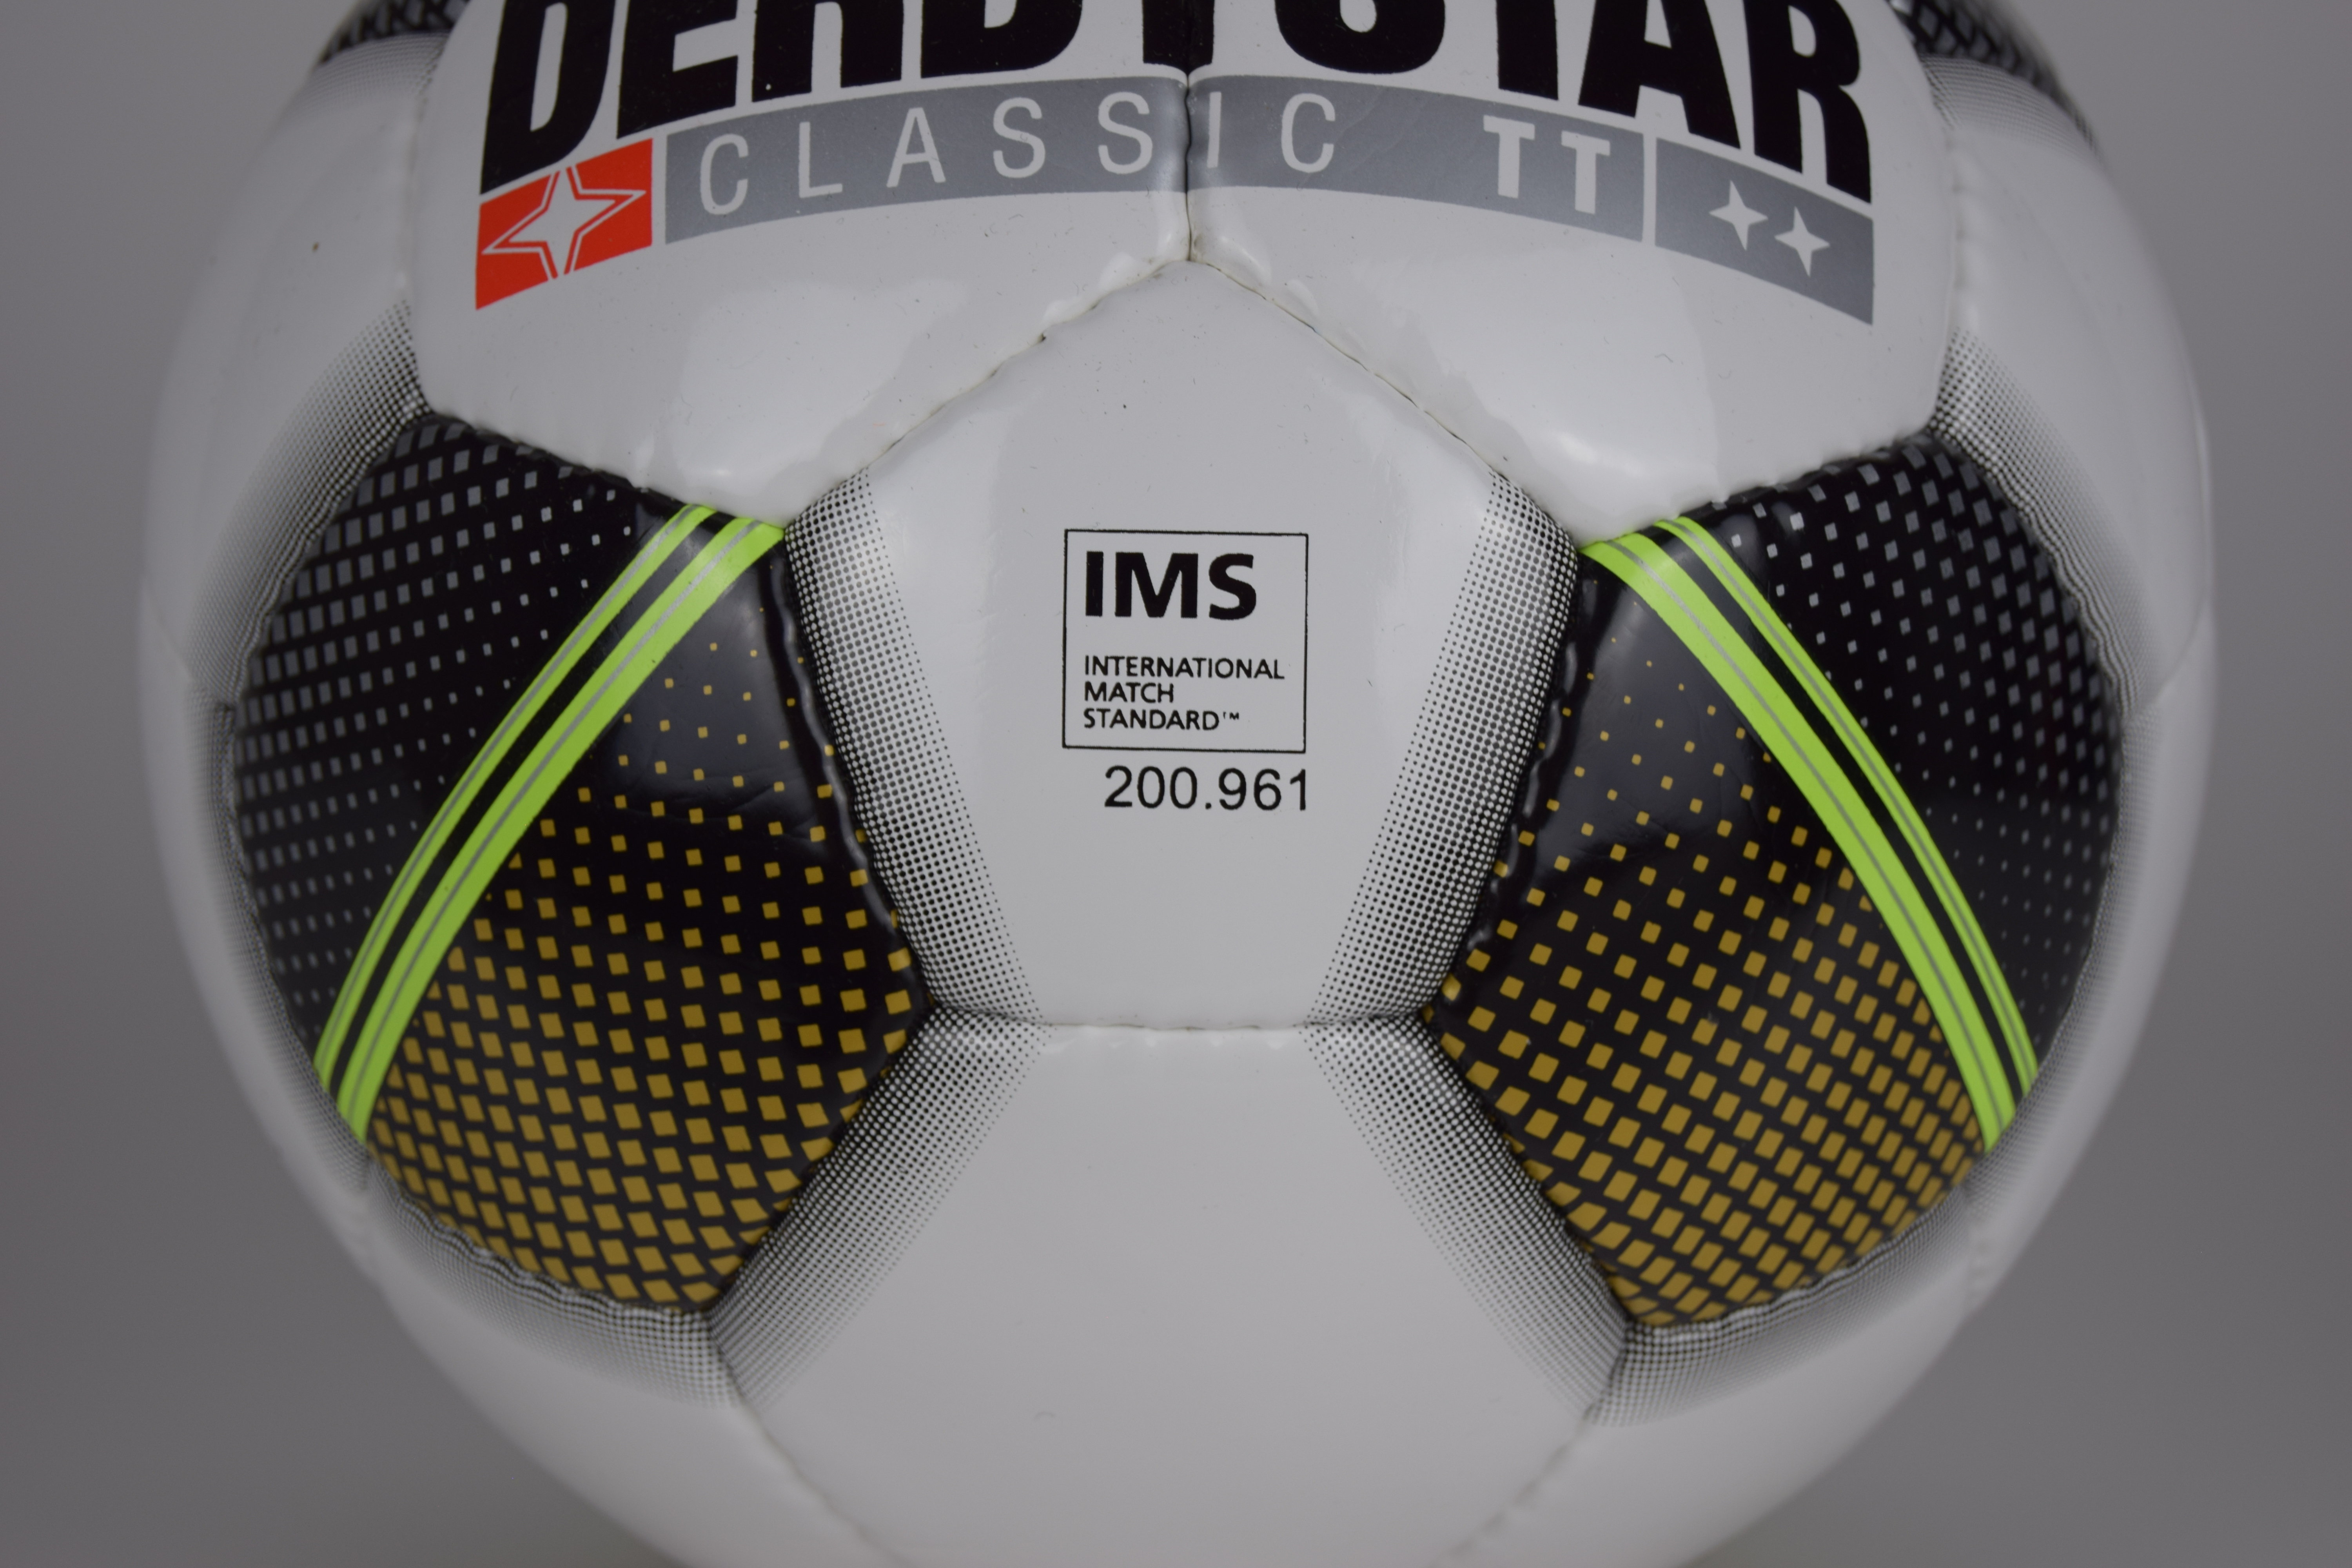 Derbystar TT | Wit | Voetbal